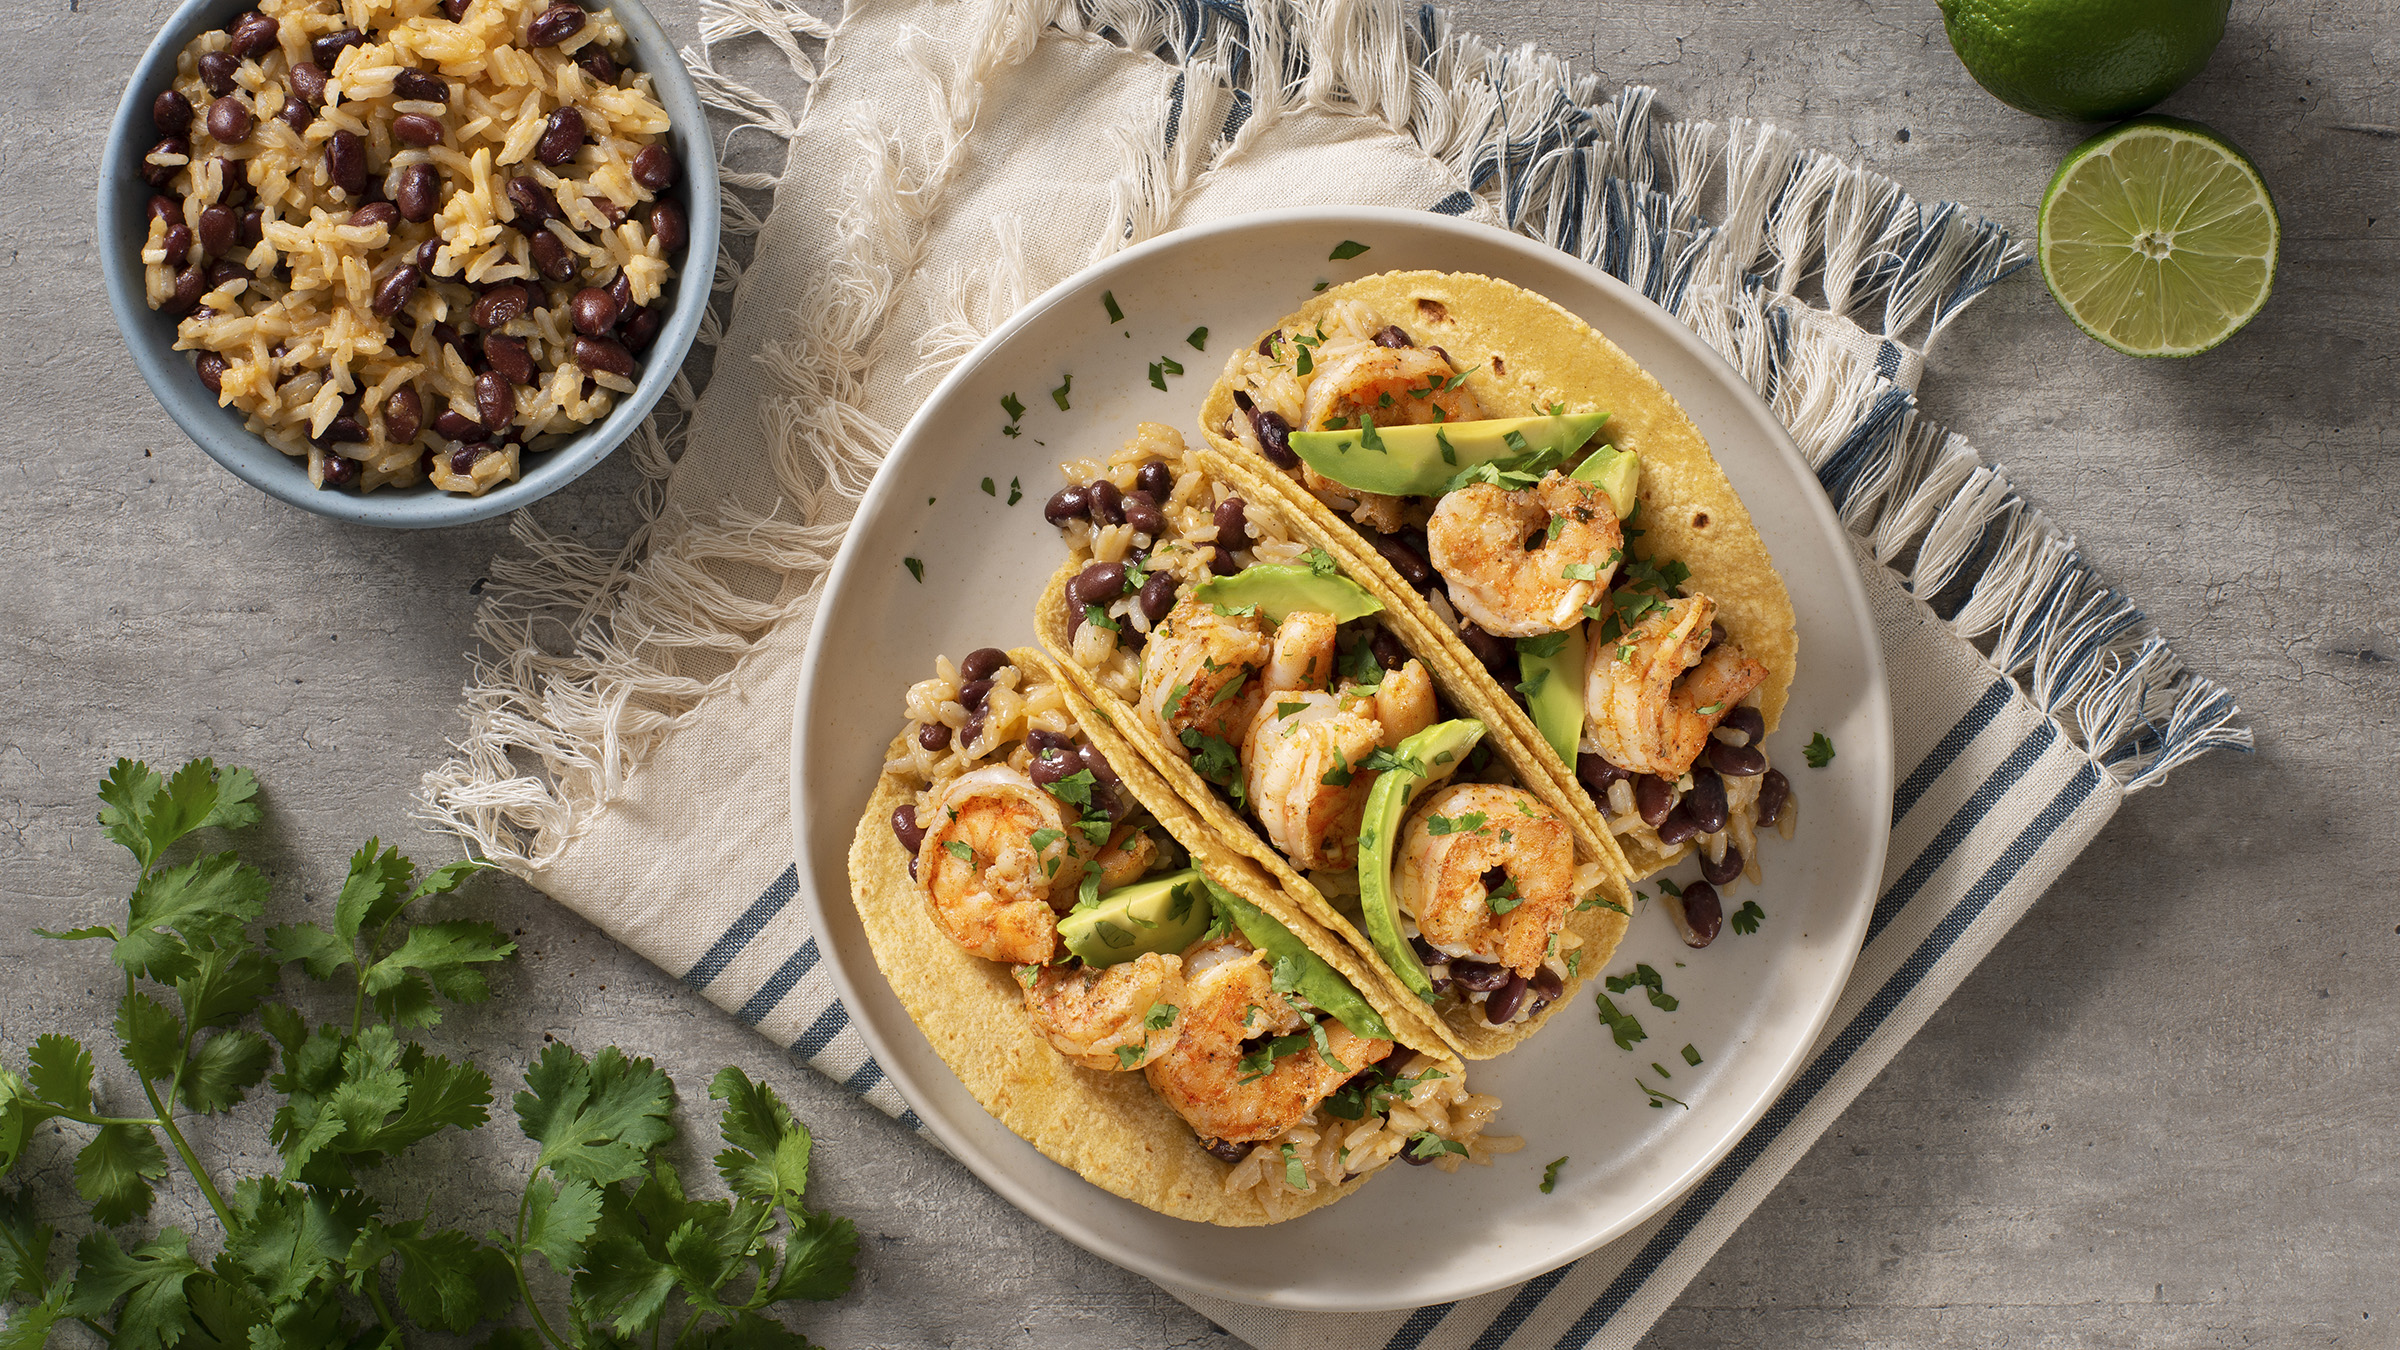 cuban-inspired-shrimp-tacos-with-avocado-black-beans-and-jasmine-rice